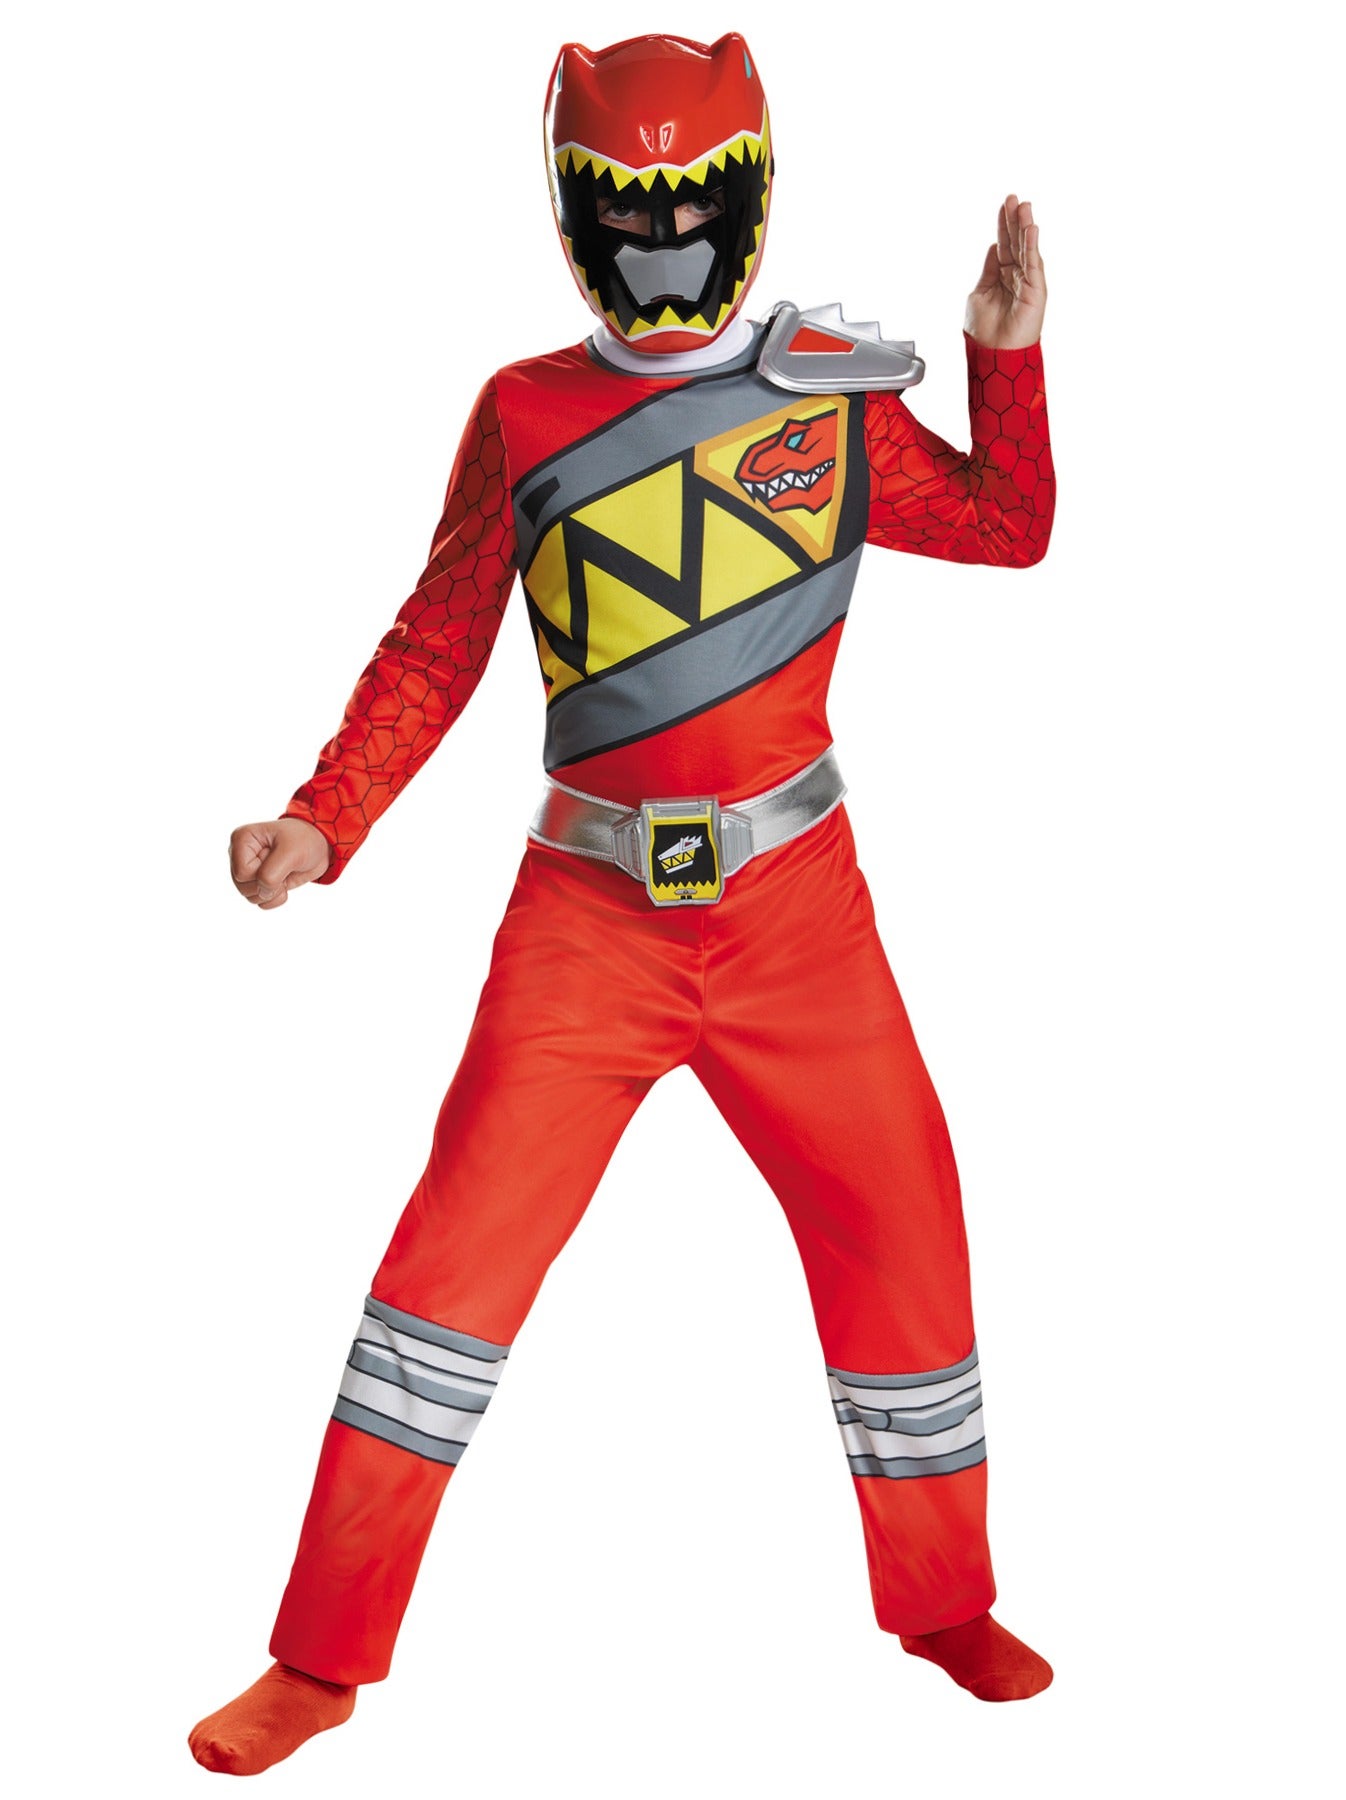 Hobbypos Red Ranger Saban's Power Rangers Dino Charge Superhero Boys Costume